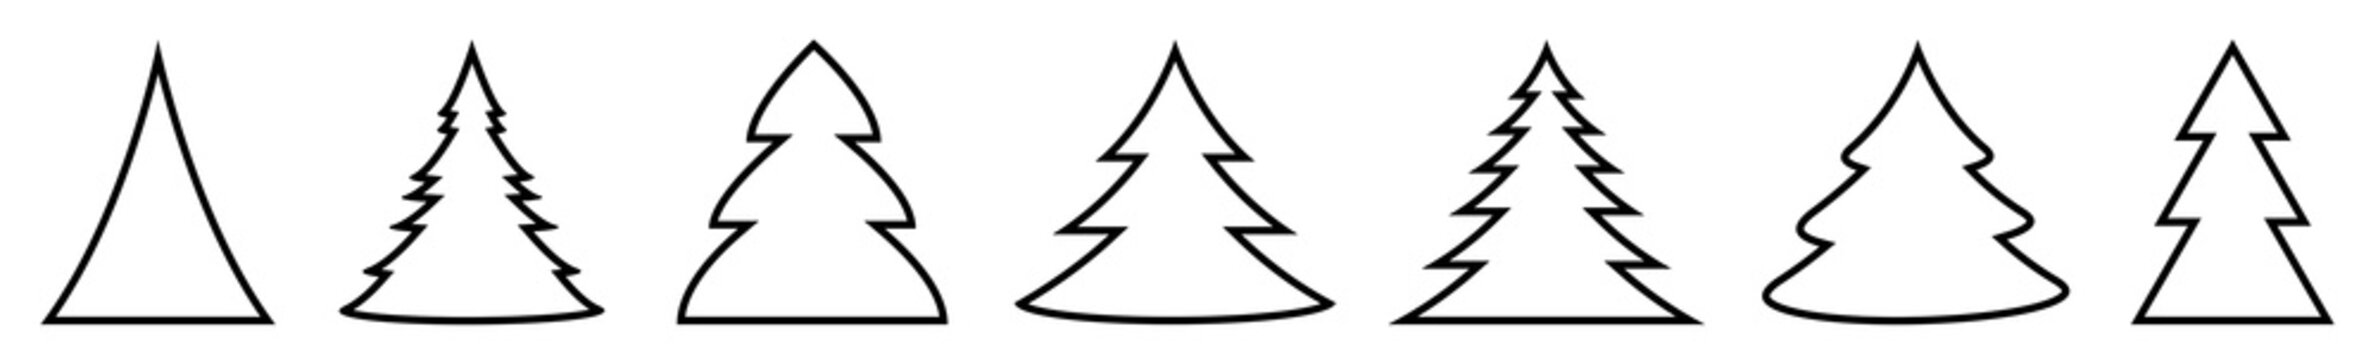 Christmas Tree Black Shape Icon | Fir Tree Illustration | x-mas Symbol | Logo | Isolated Variations